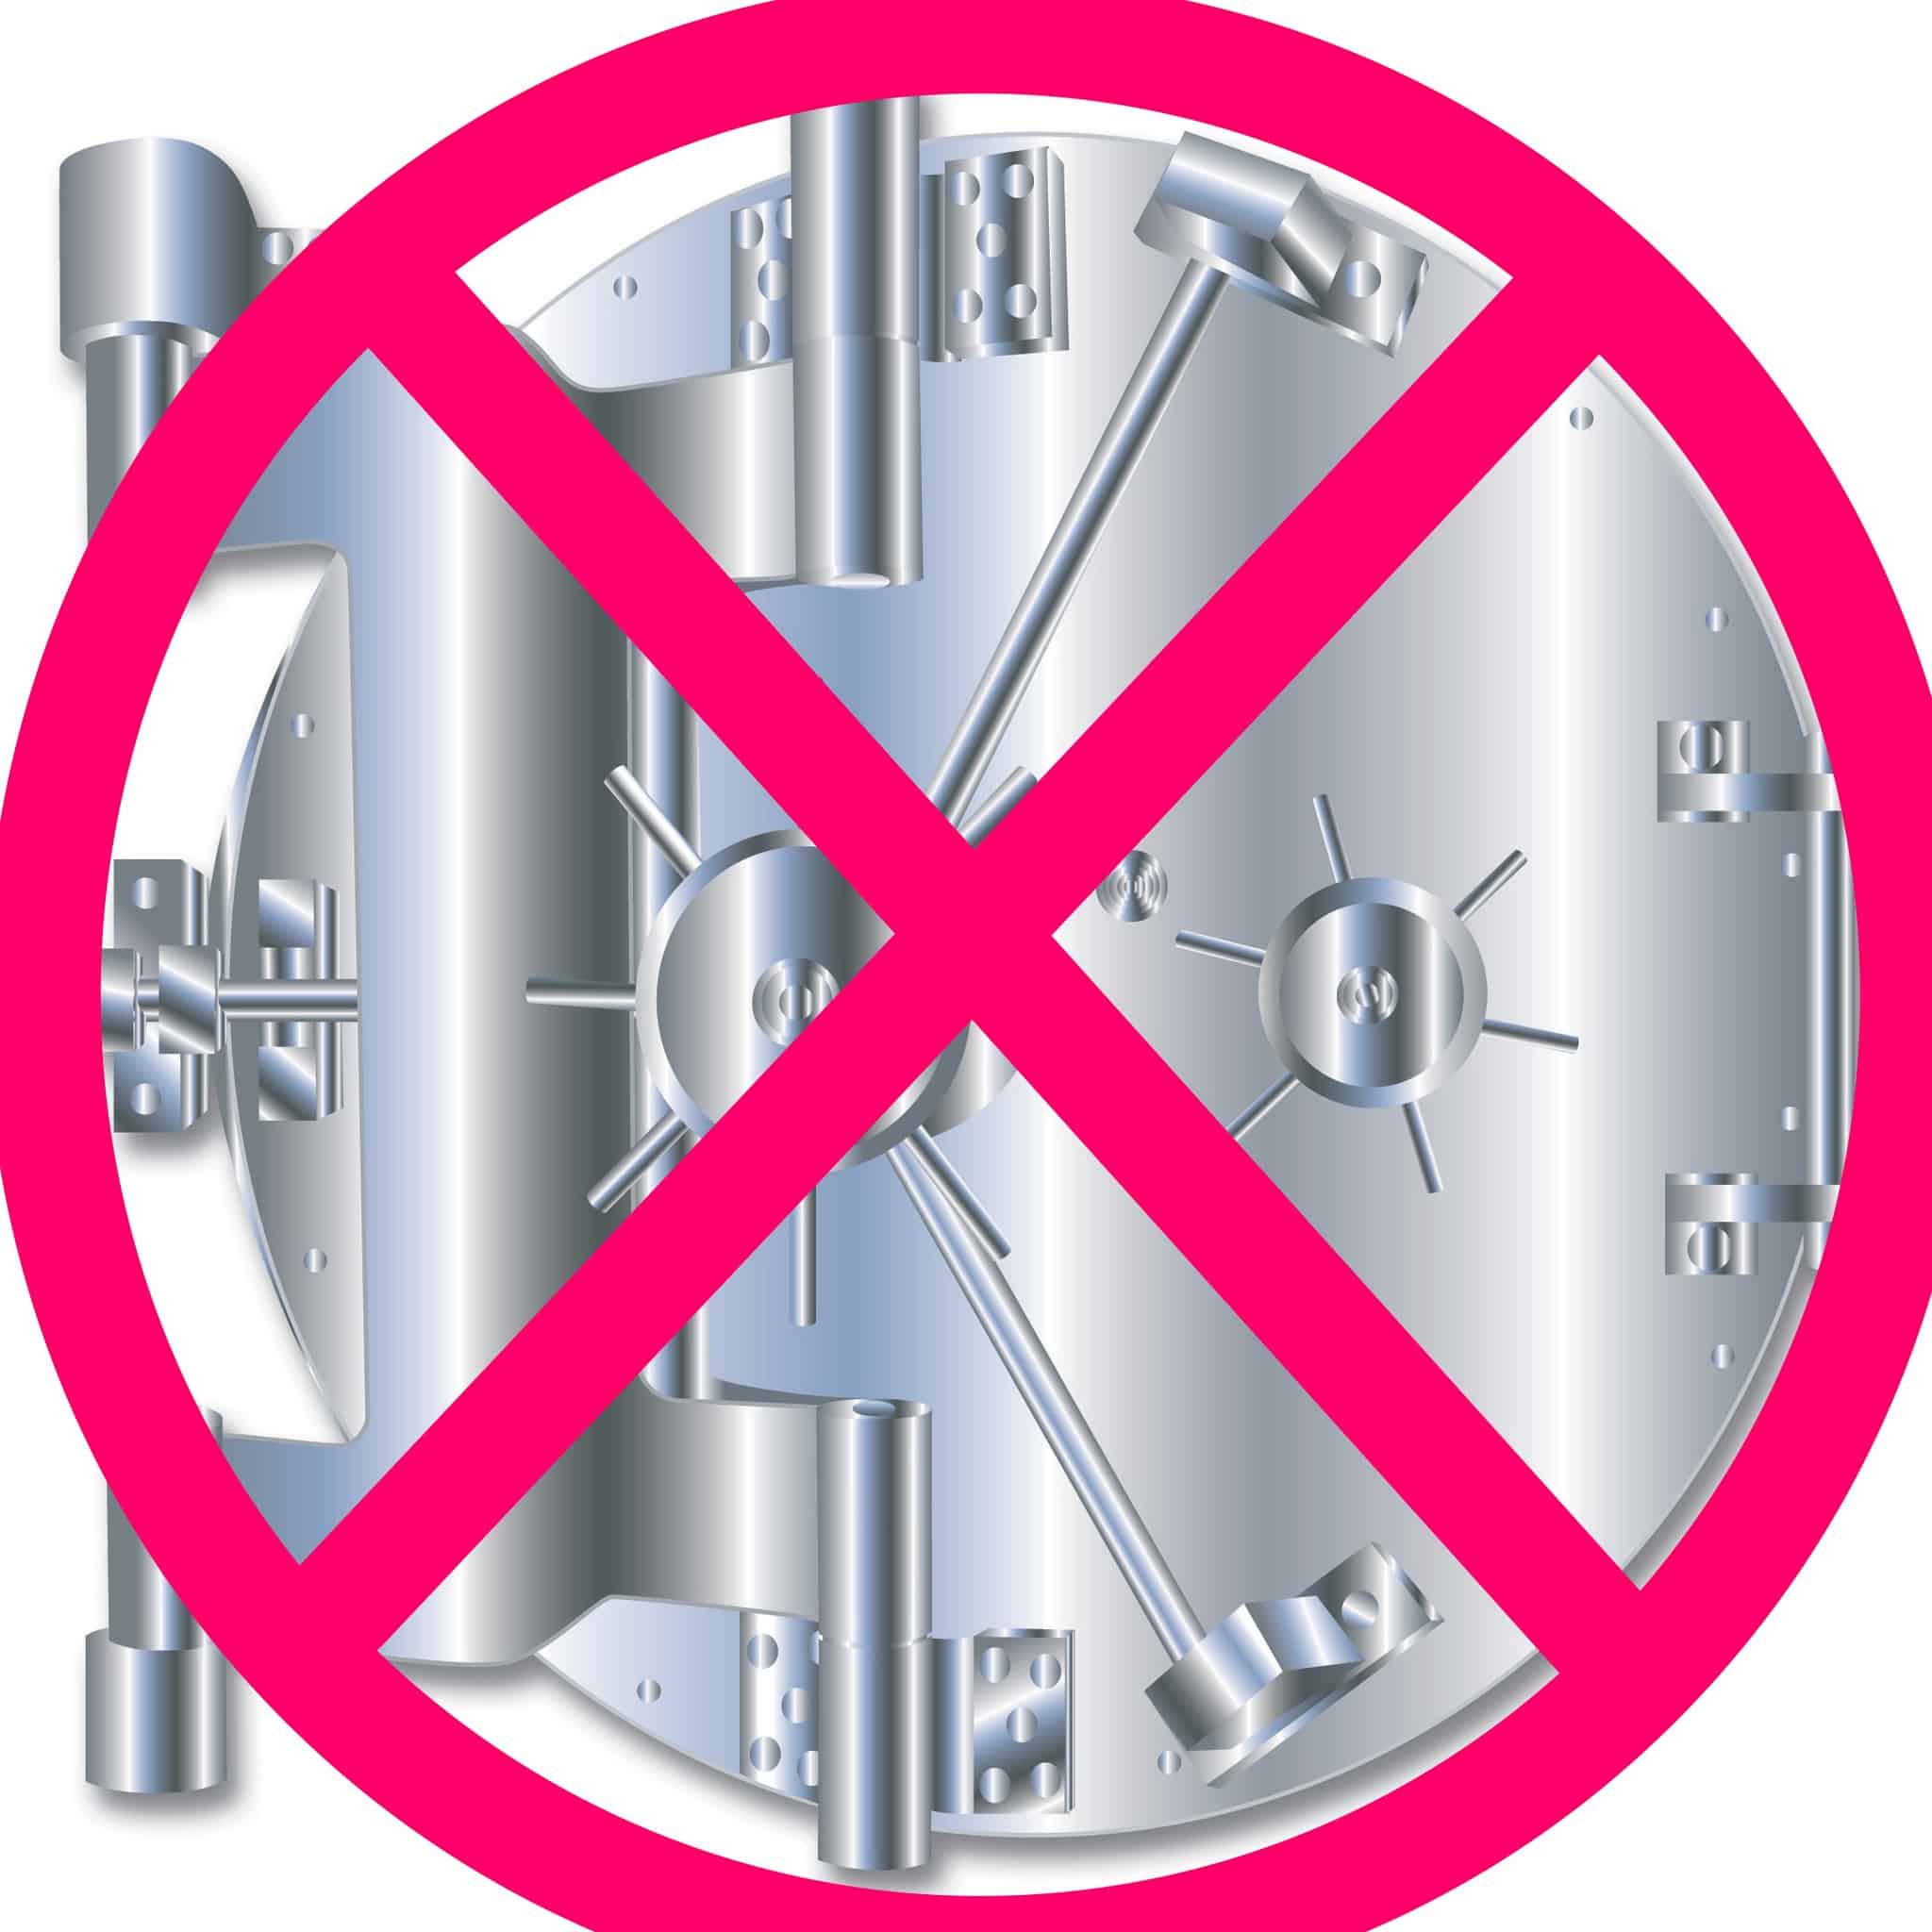 Don't-use-bank-vaults